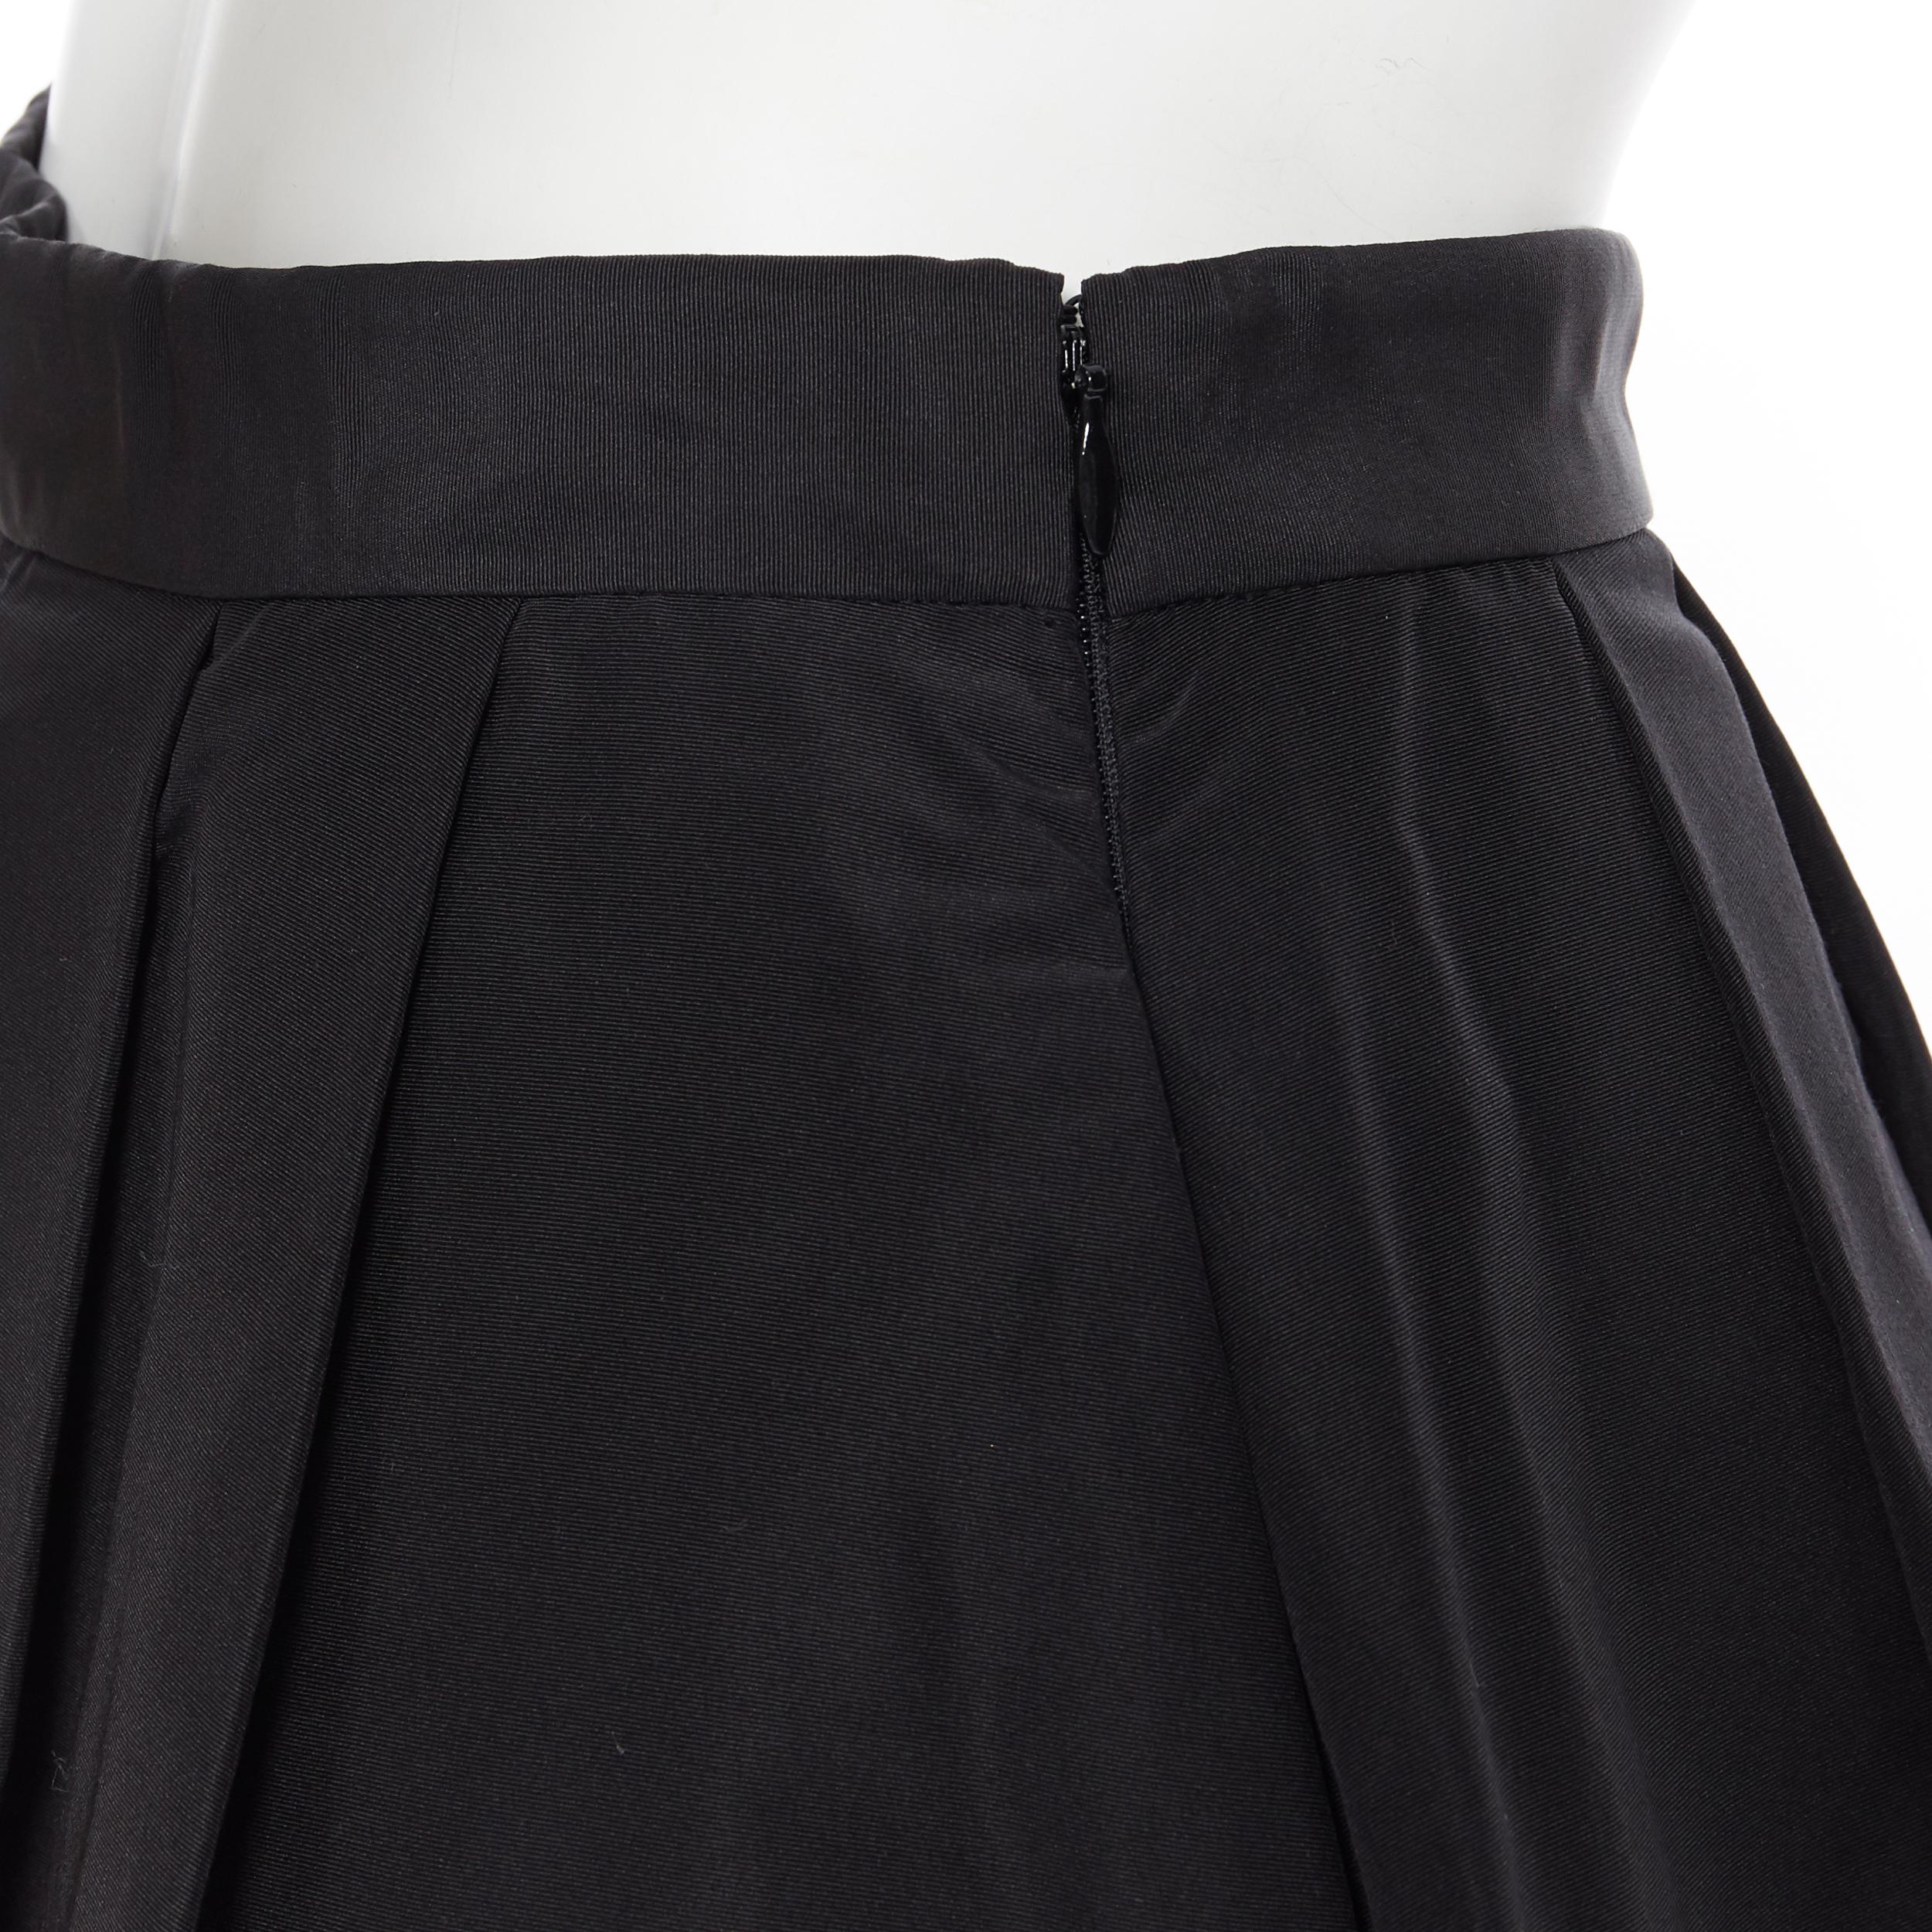 RALPH LAUREN 100% mulberry silk black pleated crin lined flared skirt US0 3